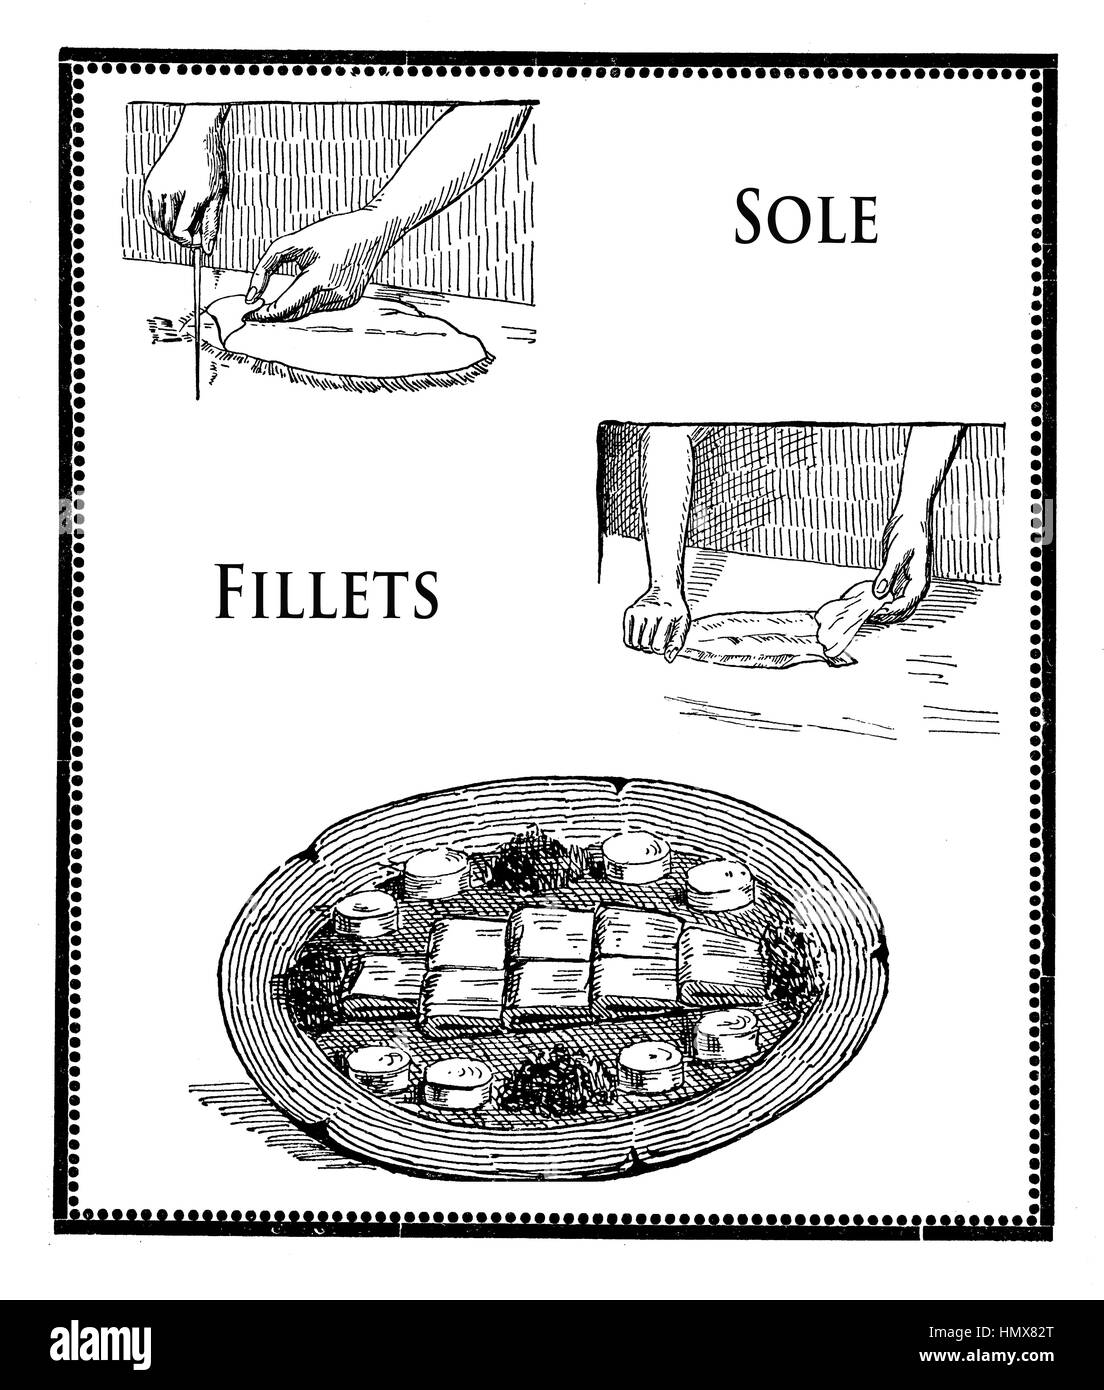 Vintage cuisine engraving, fish preparation and sole fillets presentation Stock Photo